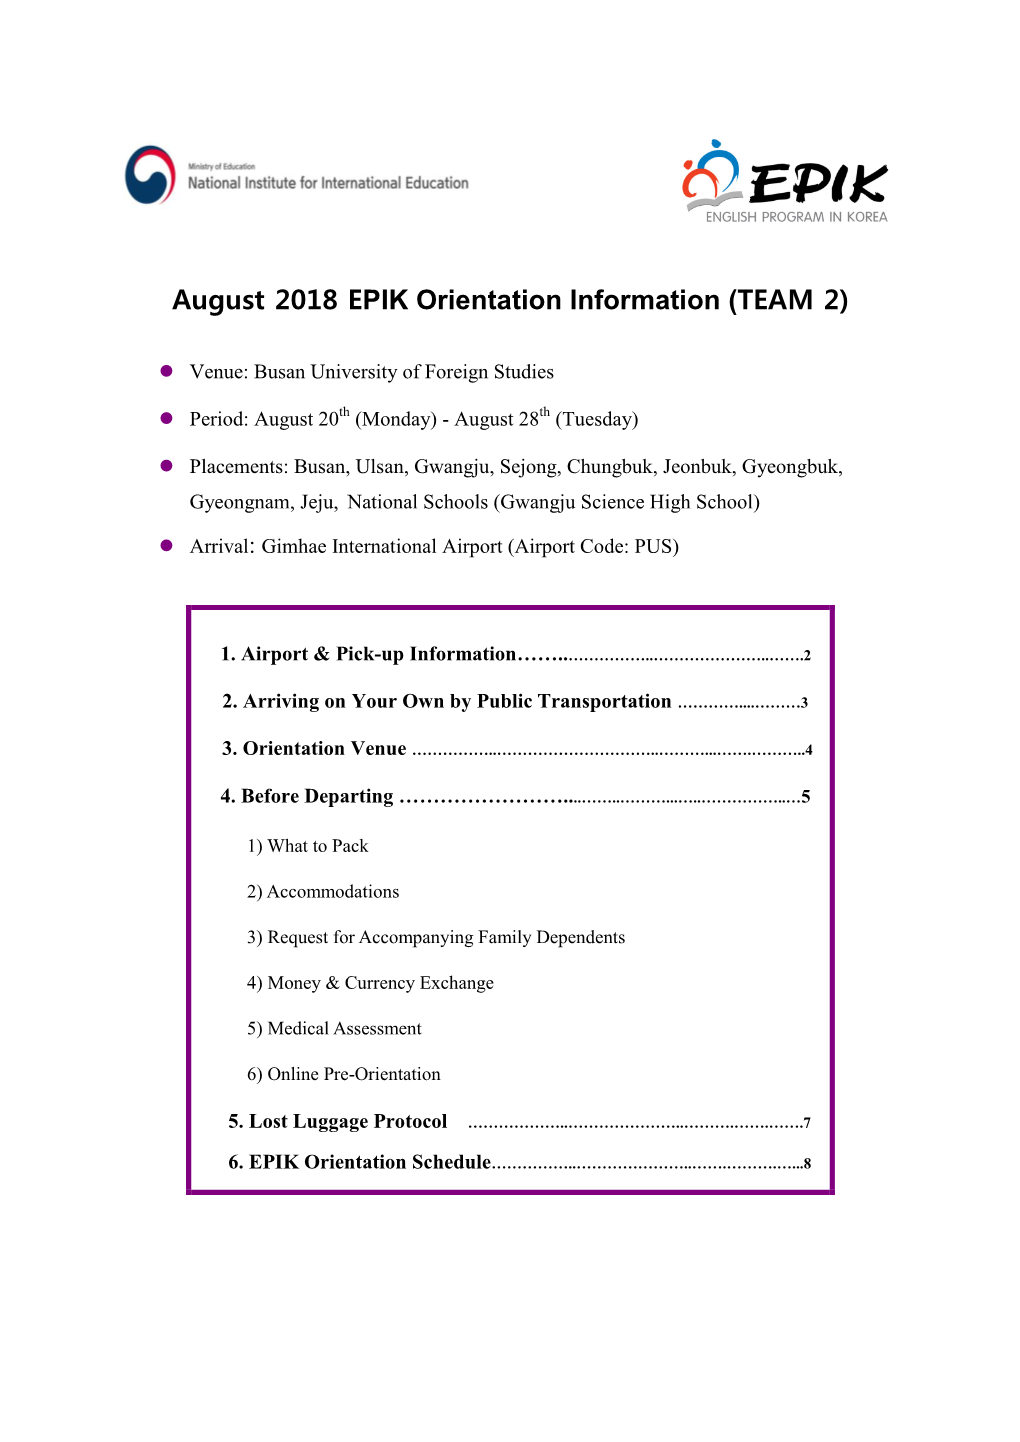 August 2018 EPIK Orientation Info for Busan University of Foreign Studies